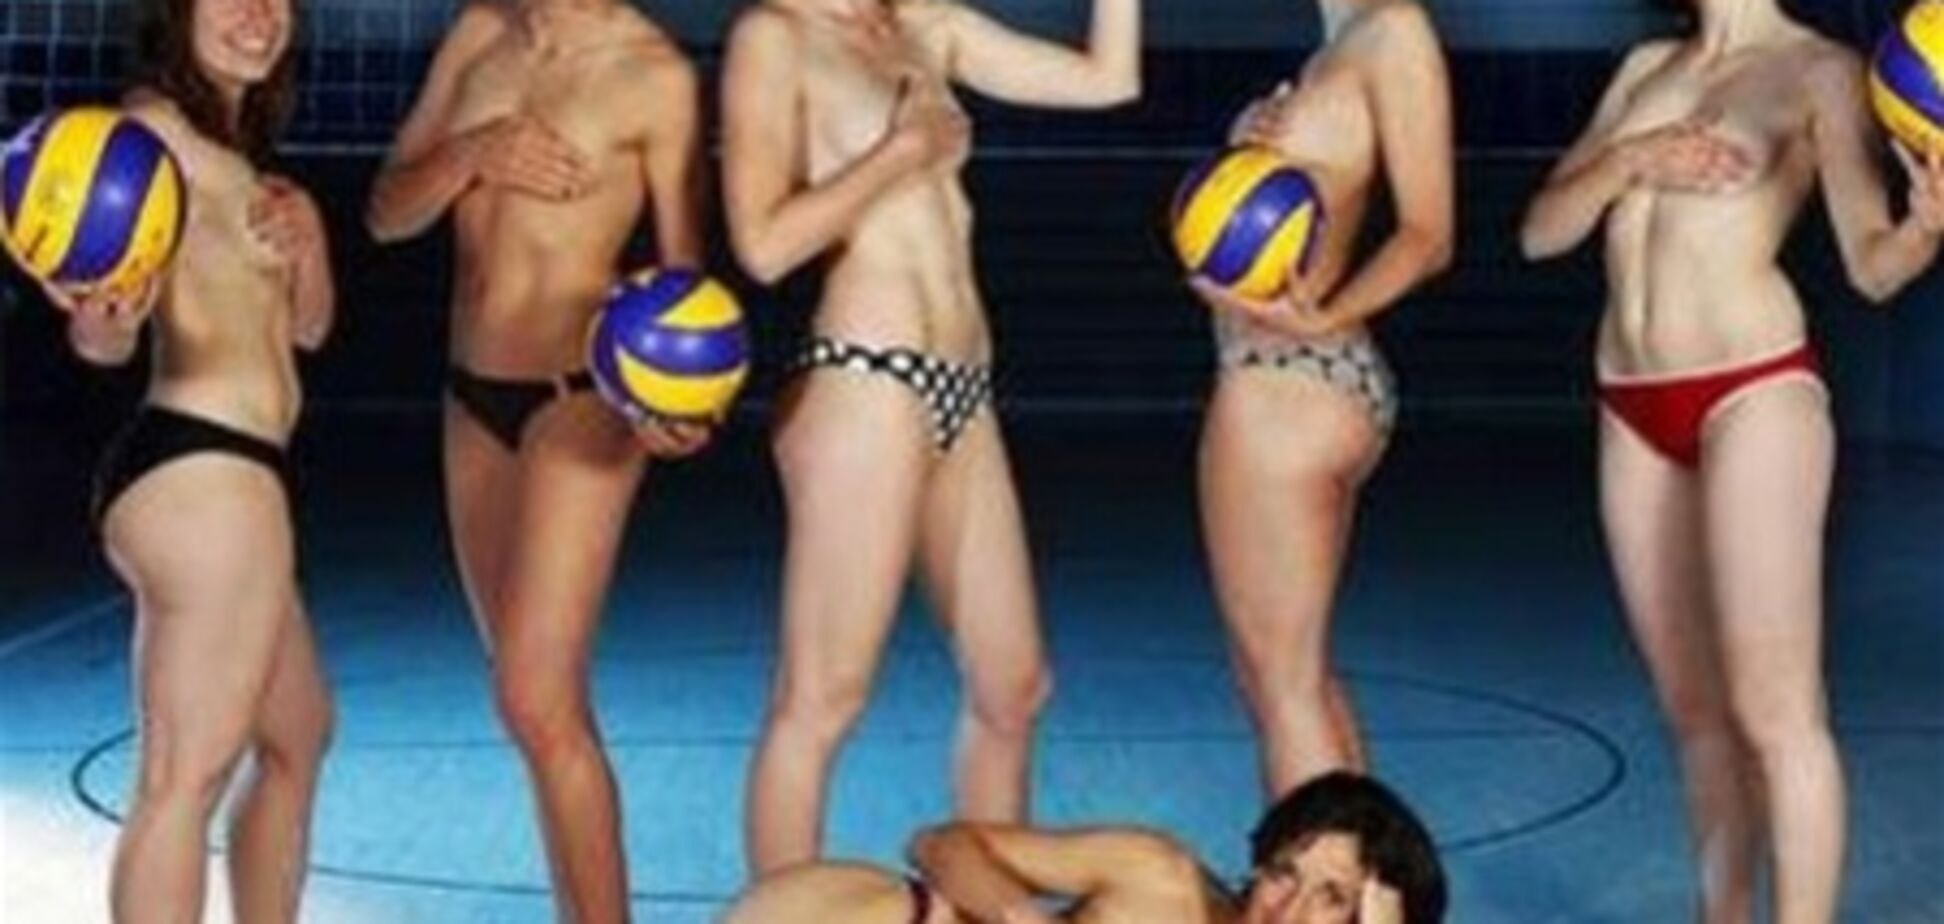 Wisconson volleyball team nude